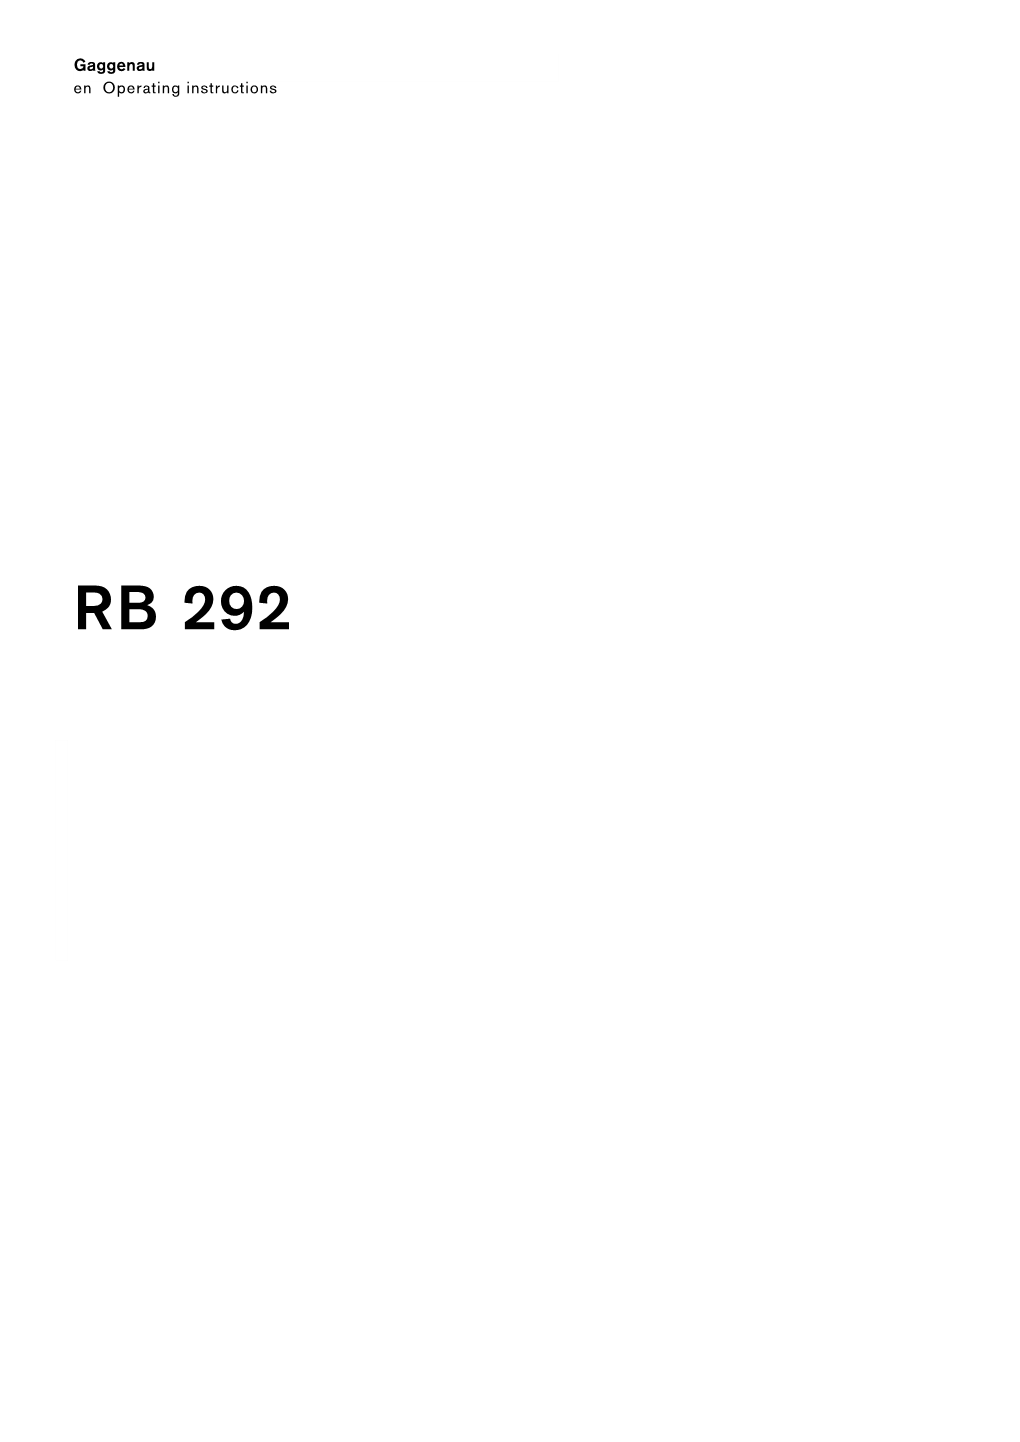 RB 292 En Table of Contentsoepneanrtiagon Naiuodisalt Ircn Tls